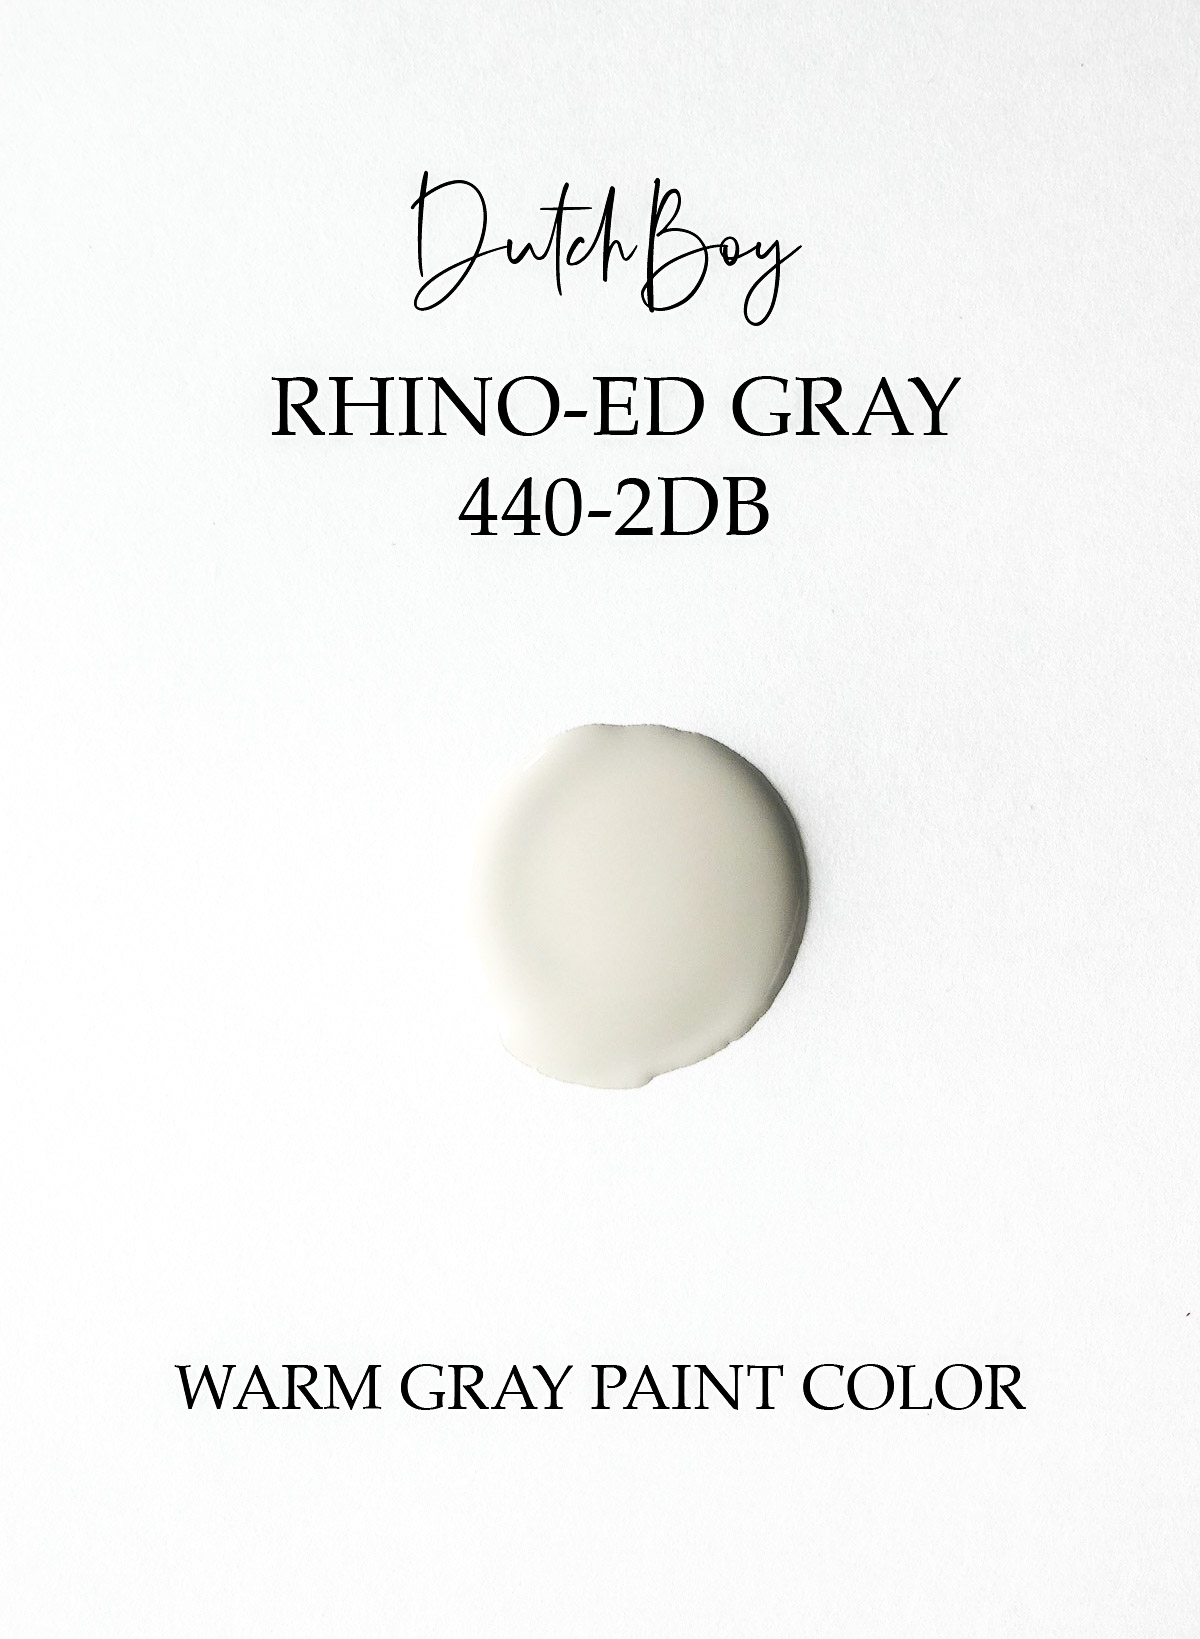 Dutch Boy Rhino-ed Gray Paint 